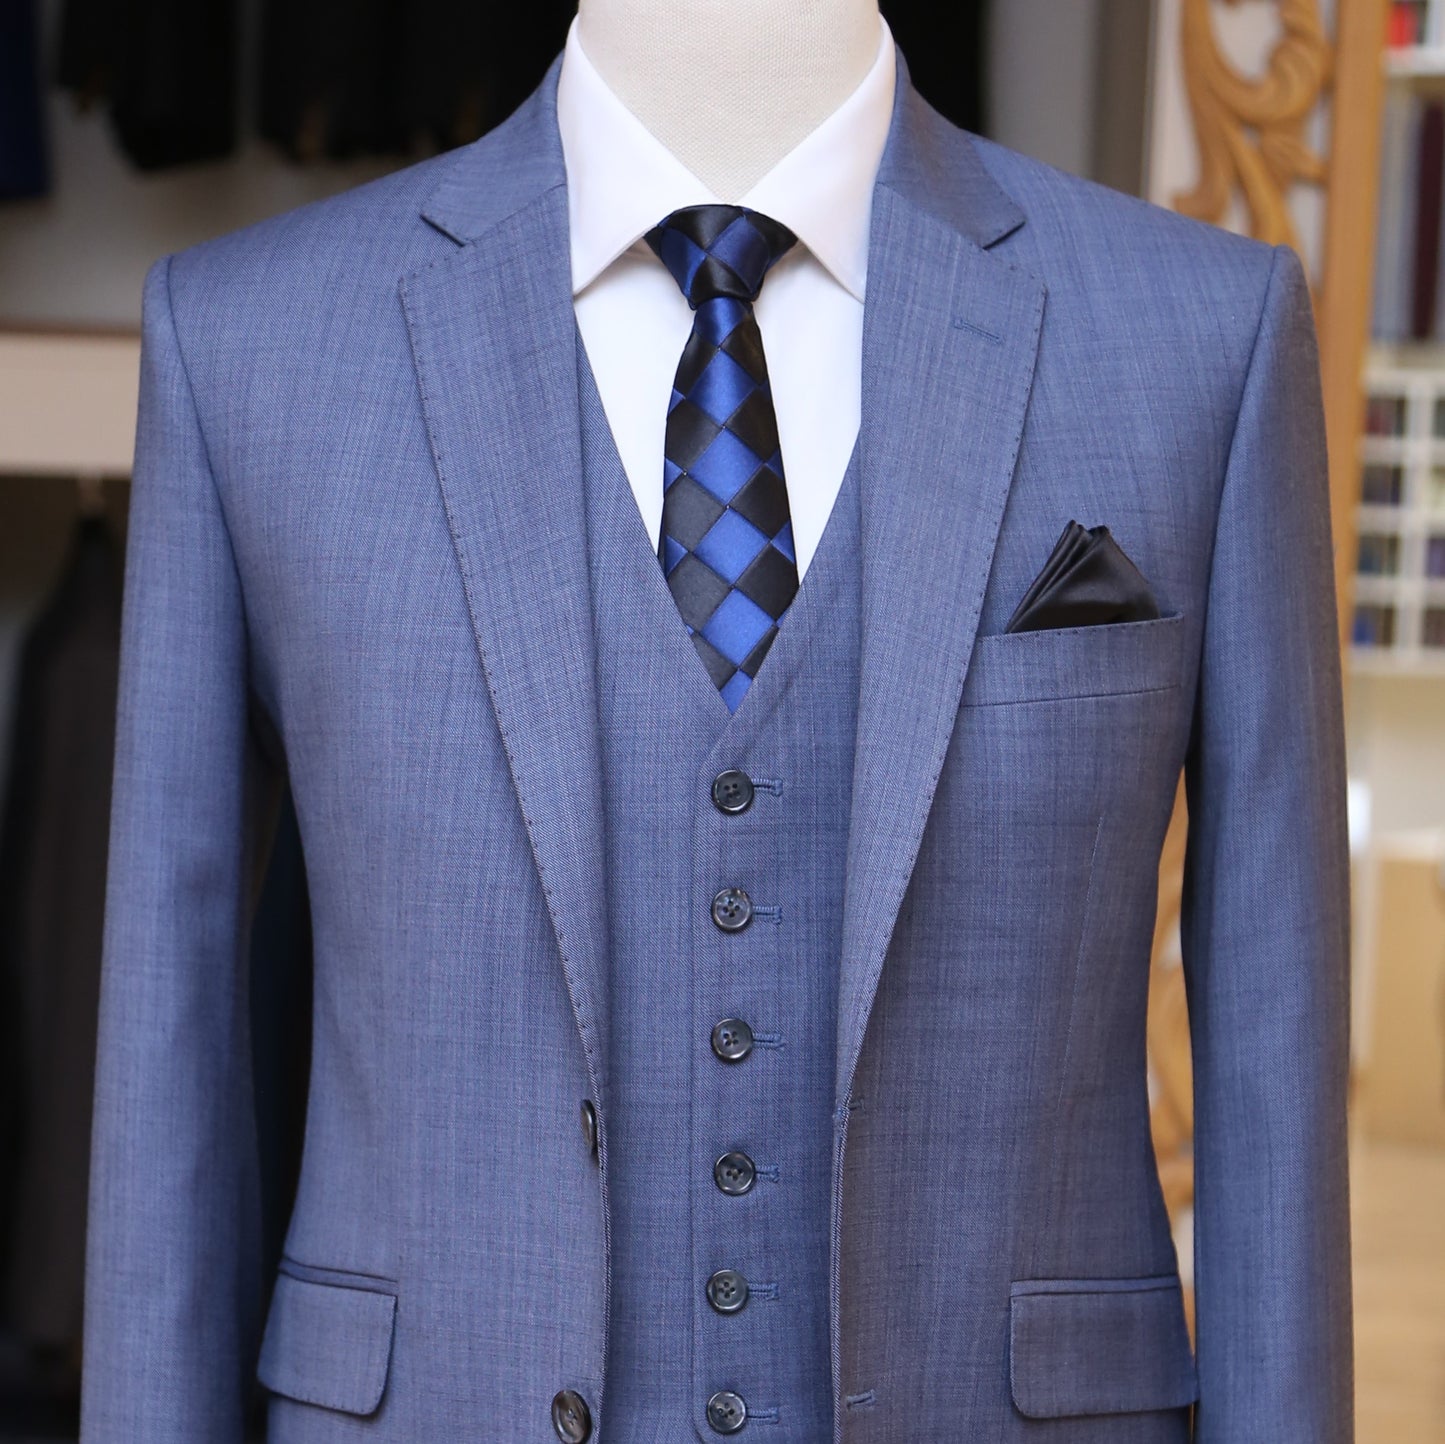 Bespoke 3 piece suit with pick stitch – Uomo Attire